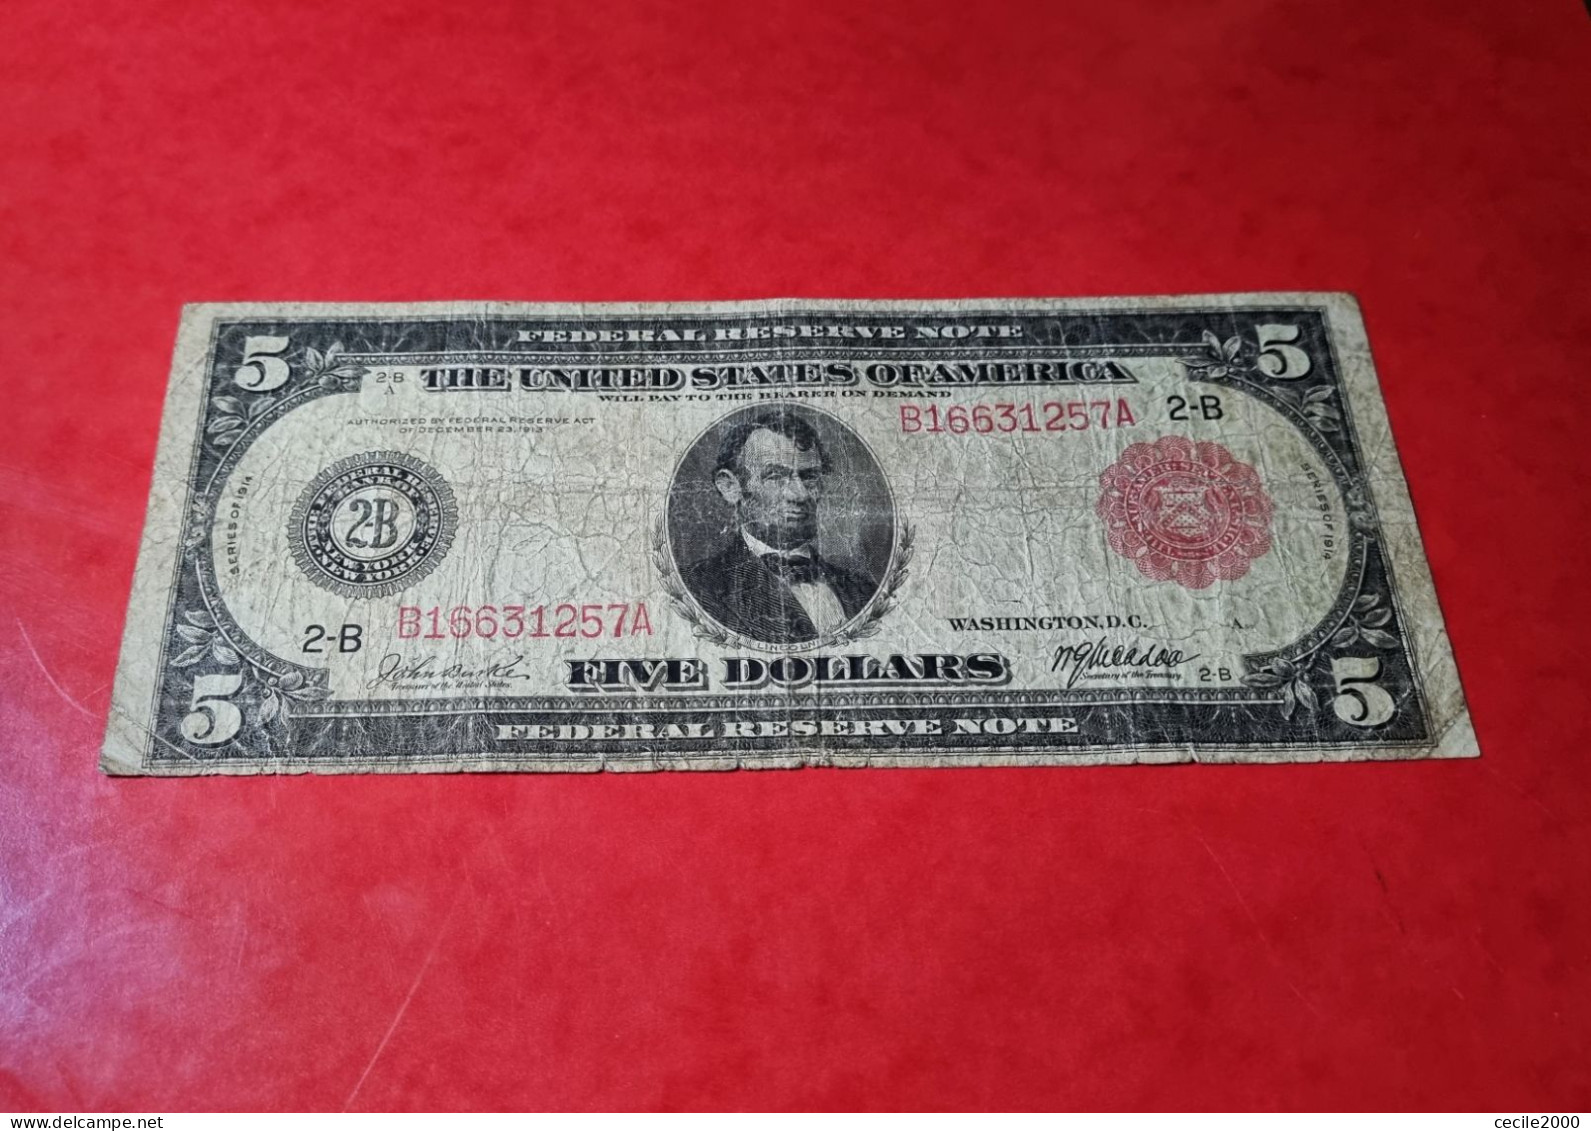 SCARCE 1914 USA $5 DOLLARS *RED SEAL* UNITED STATES BANKNOTE F BILLETE ESTADOS UNIDOS COMPRAS MULTIPLES CONSULTAR - Biljetten Van De Verenigde Staten (1862-1923)